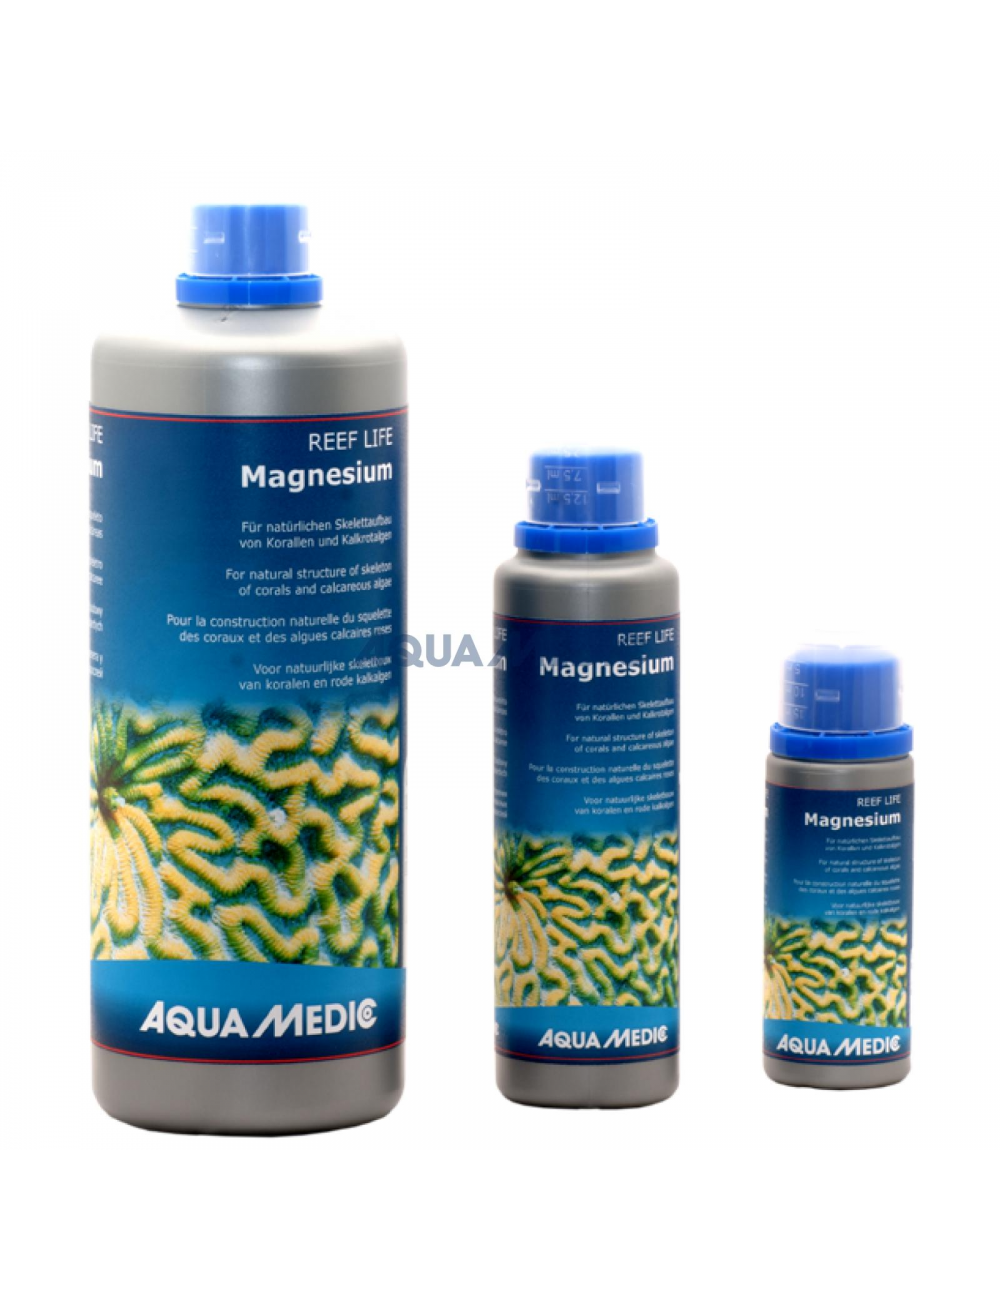 AQUA-MEDIC - REEF LIFE Magnésium - 1000ml - Complément magnésium